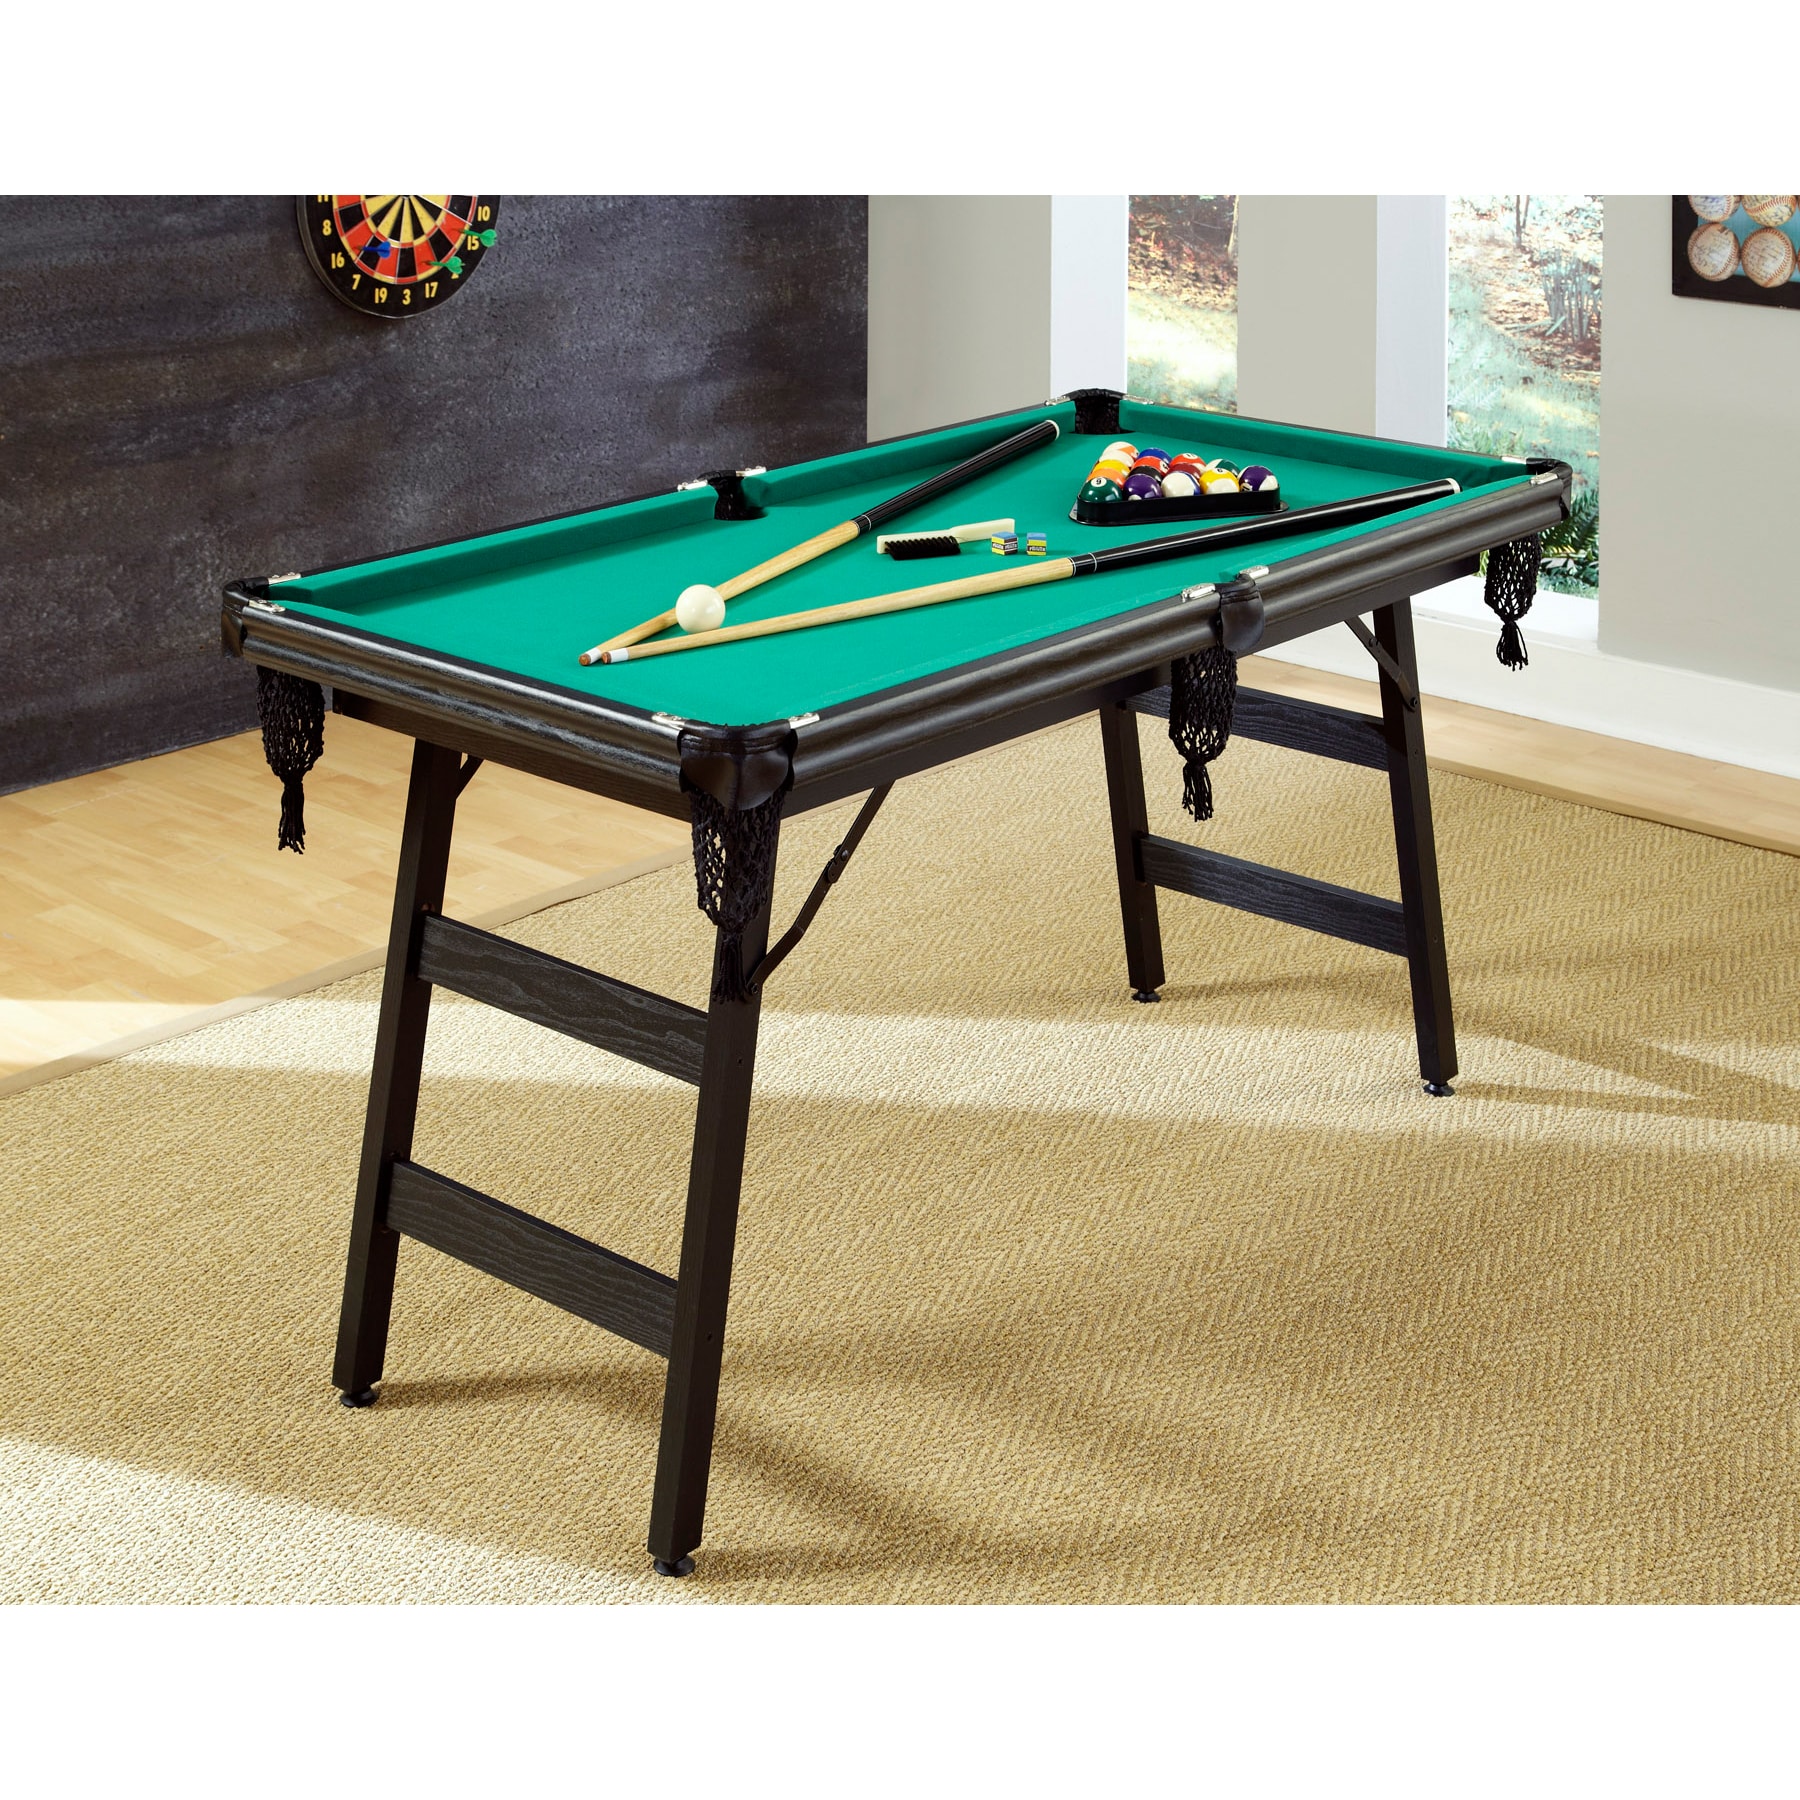 Биллиардный стол на 6 футов. Mini Pool Table 6 ft. Бильярдный стол домашний 8 ФТ. Складной бильярдный стол. Складной бильярдный